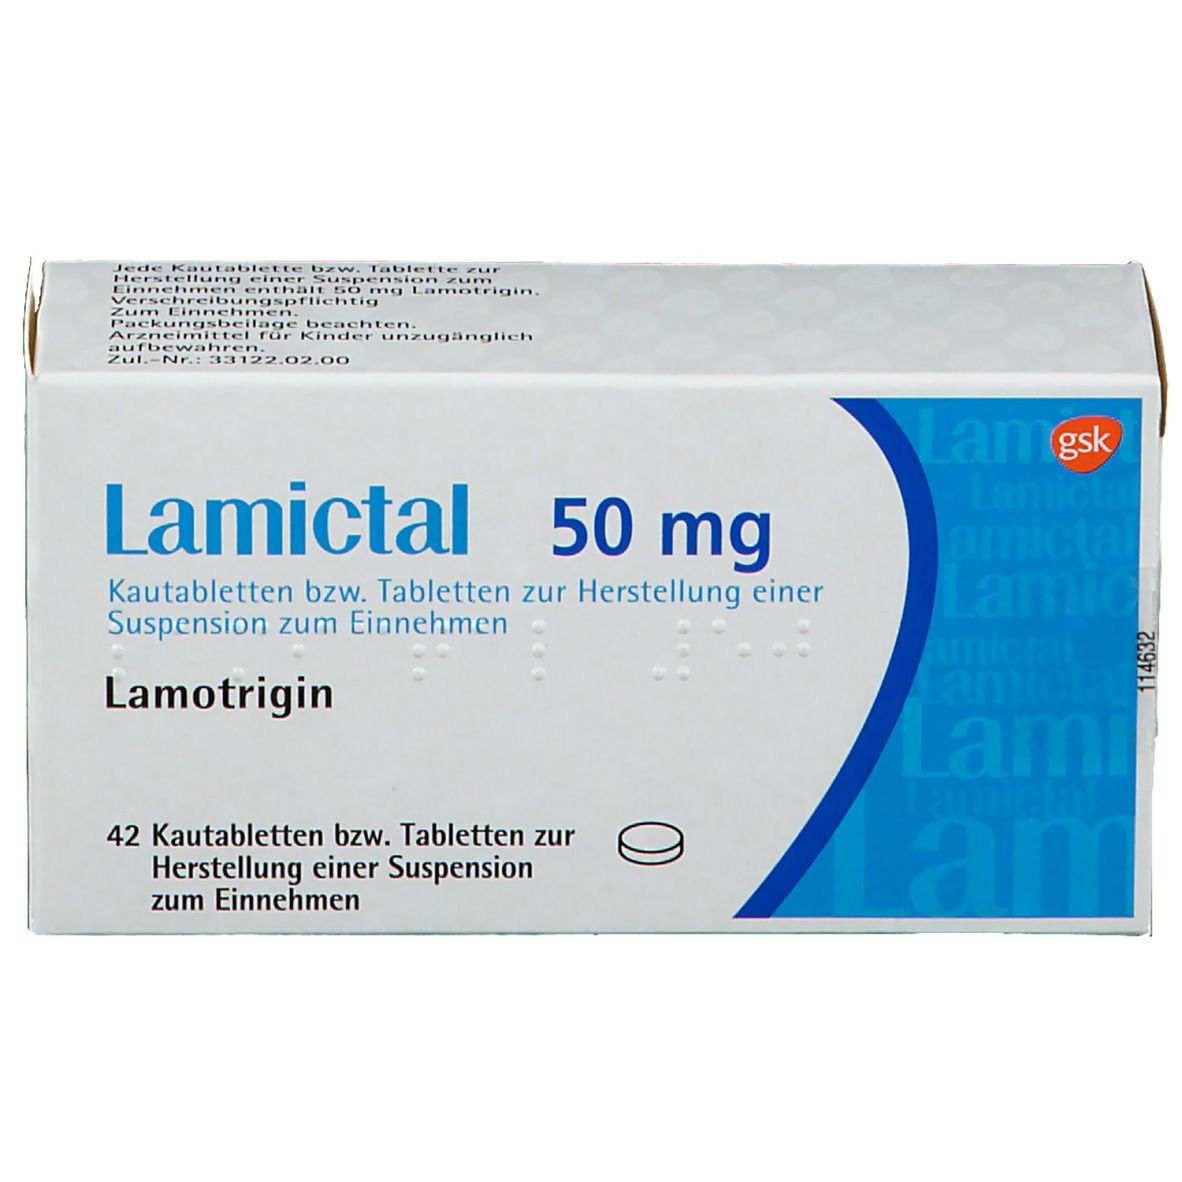 Lamictal 50 mg